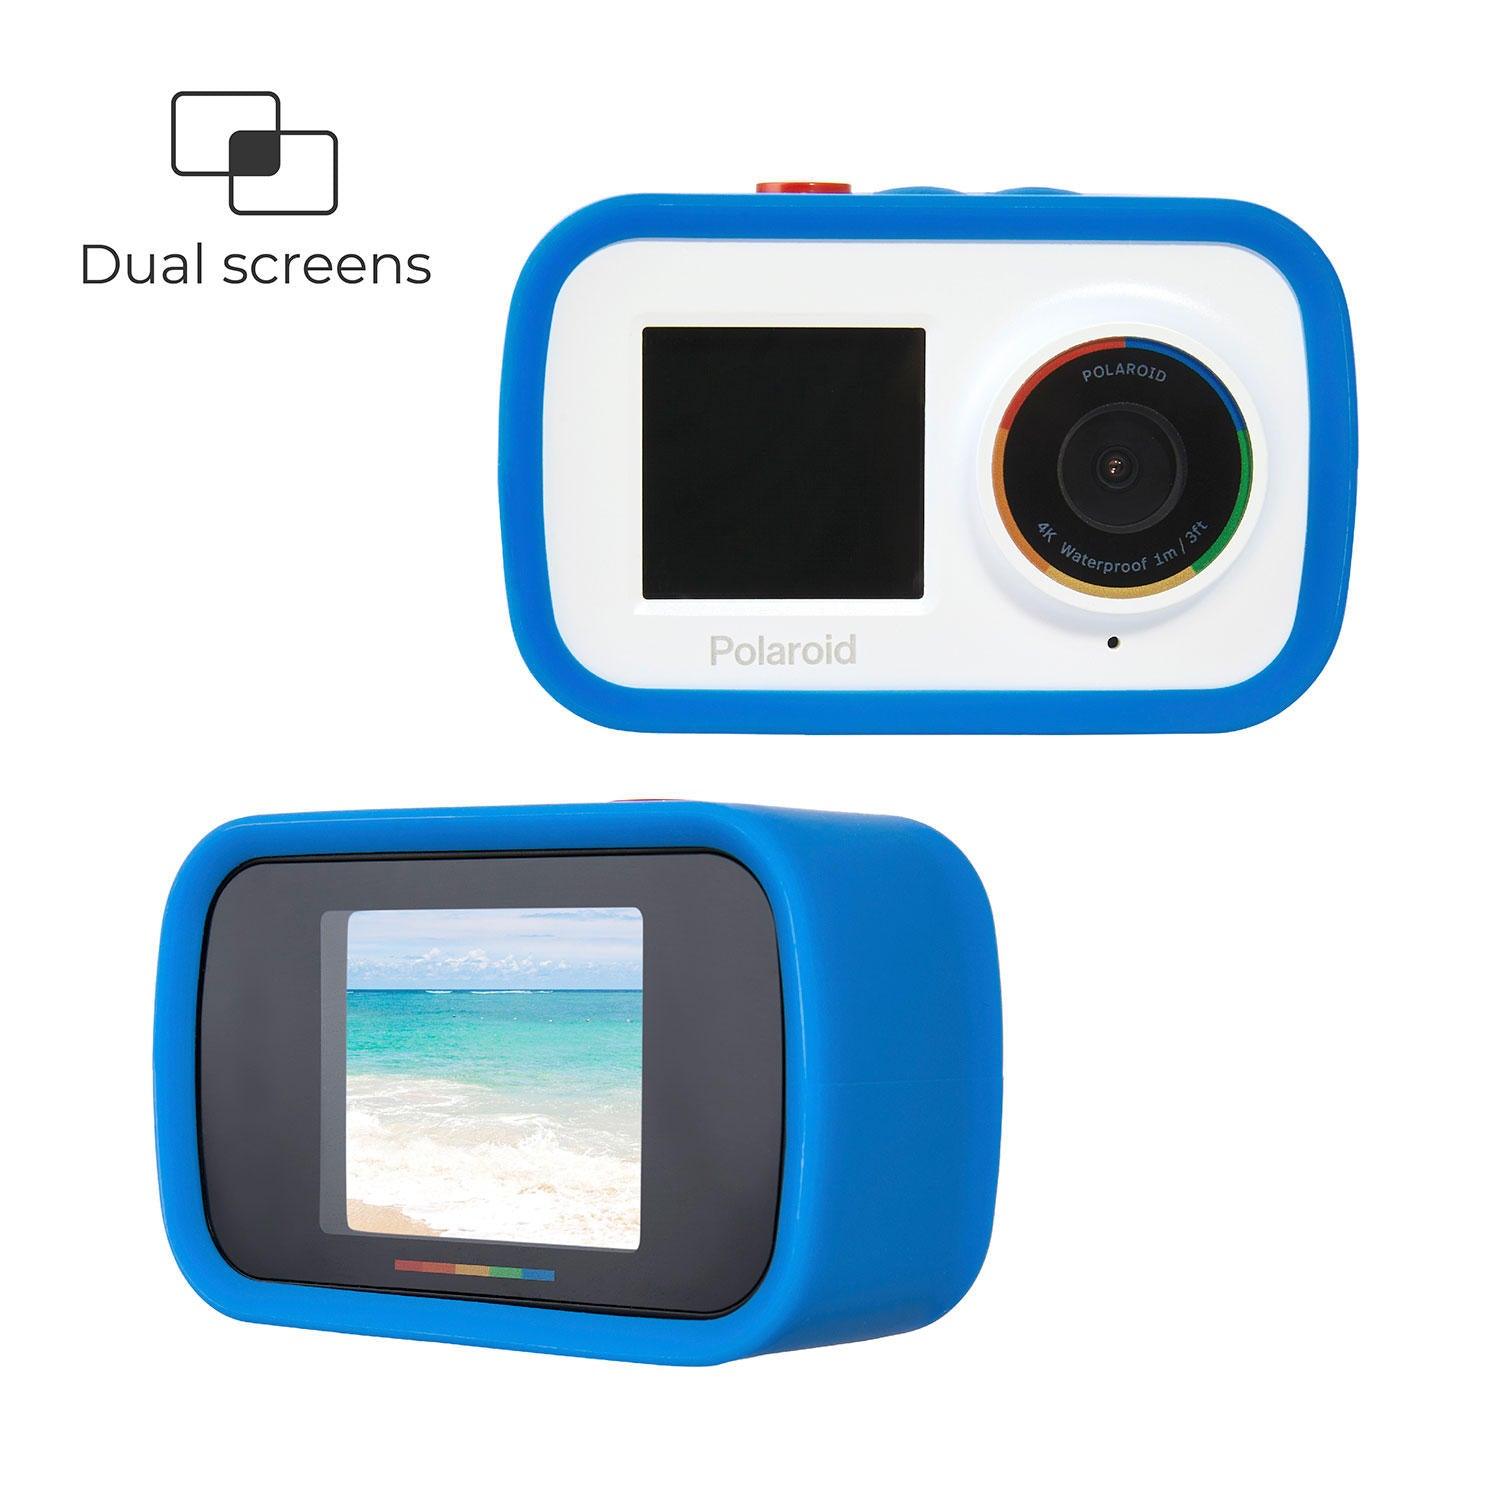 Polaroid 4k/Ultra HD Action Cam Kit - Grovano